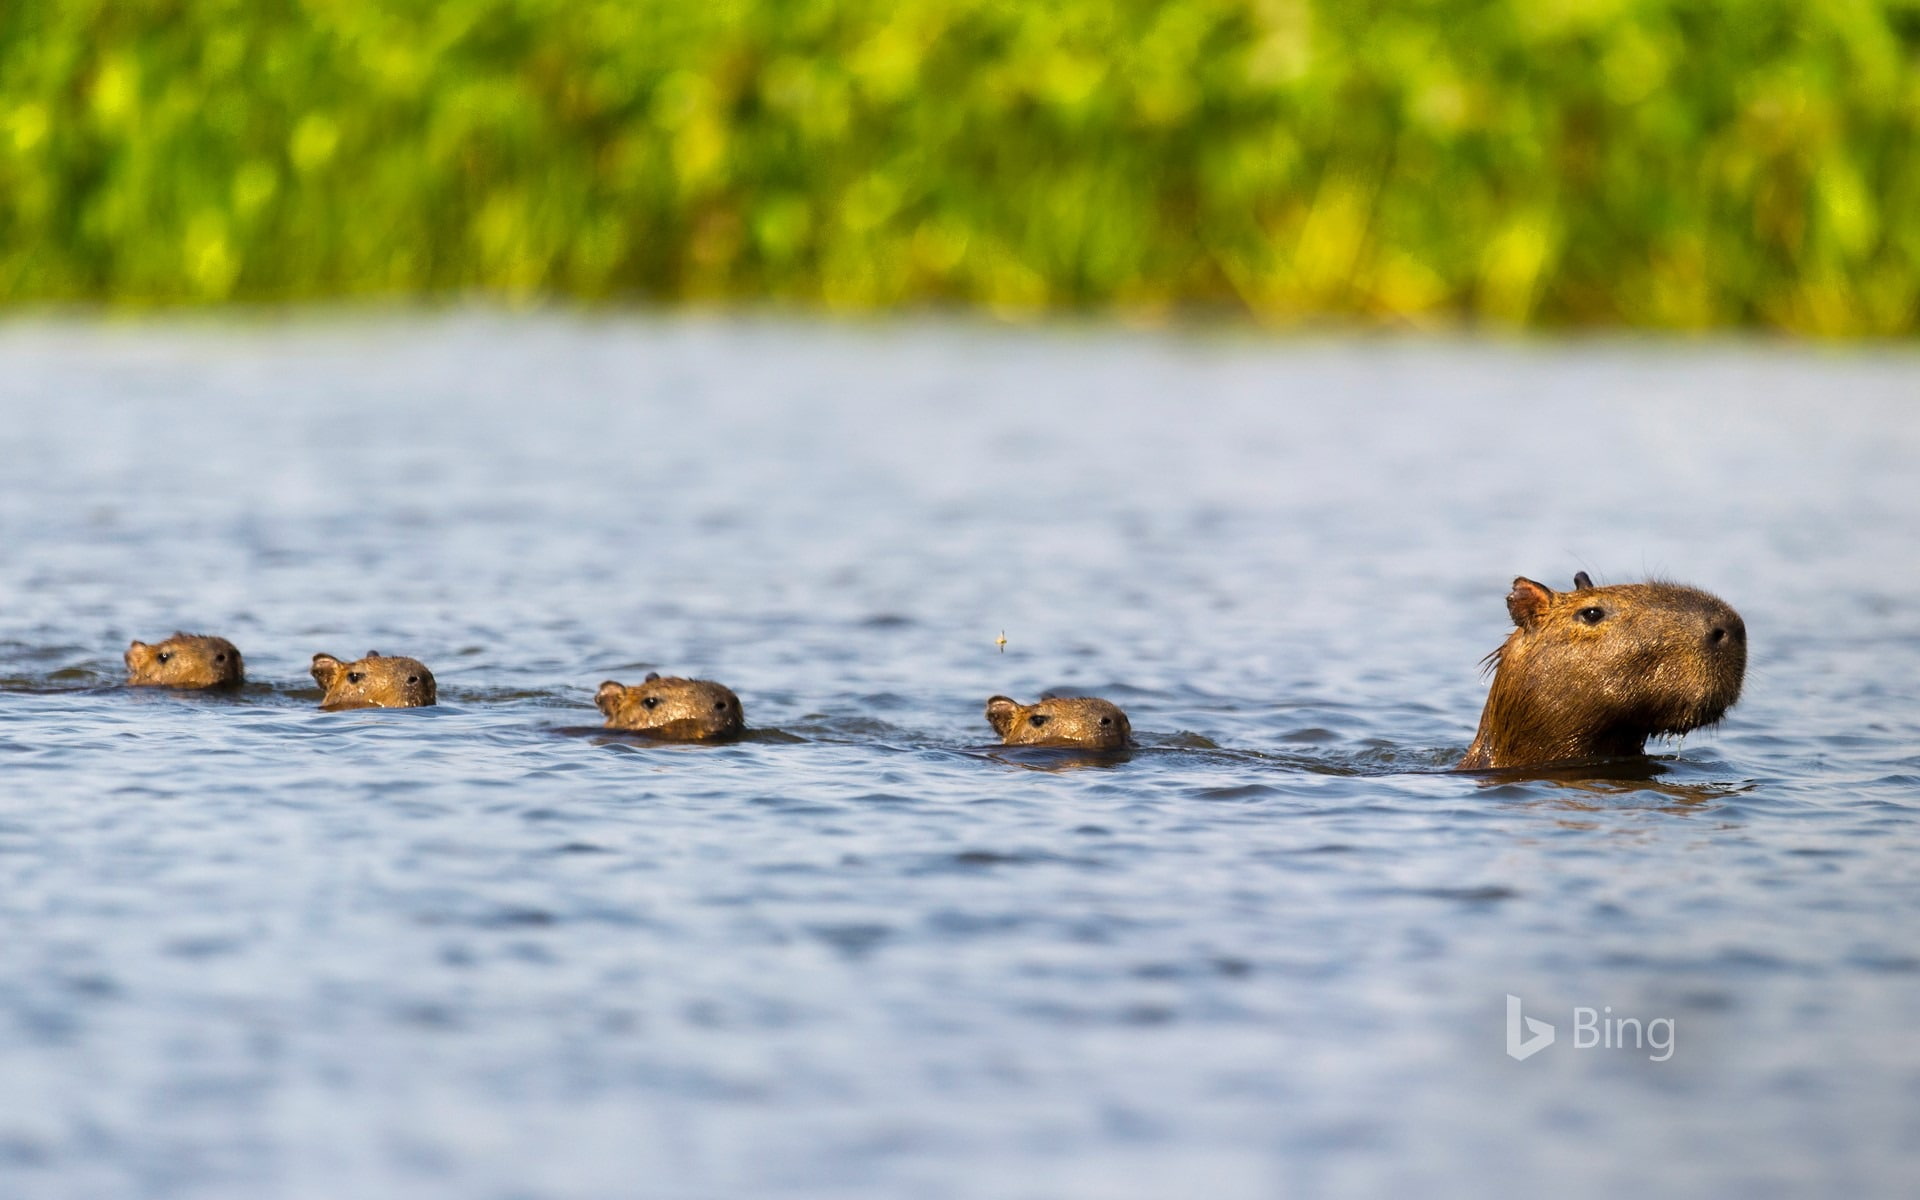 Brazil Paraguay River Capybara family 2017 Bing Wa.., water, animal themes